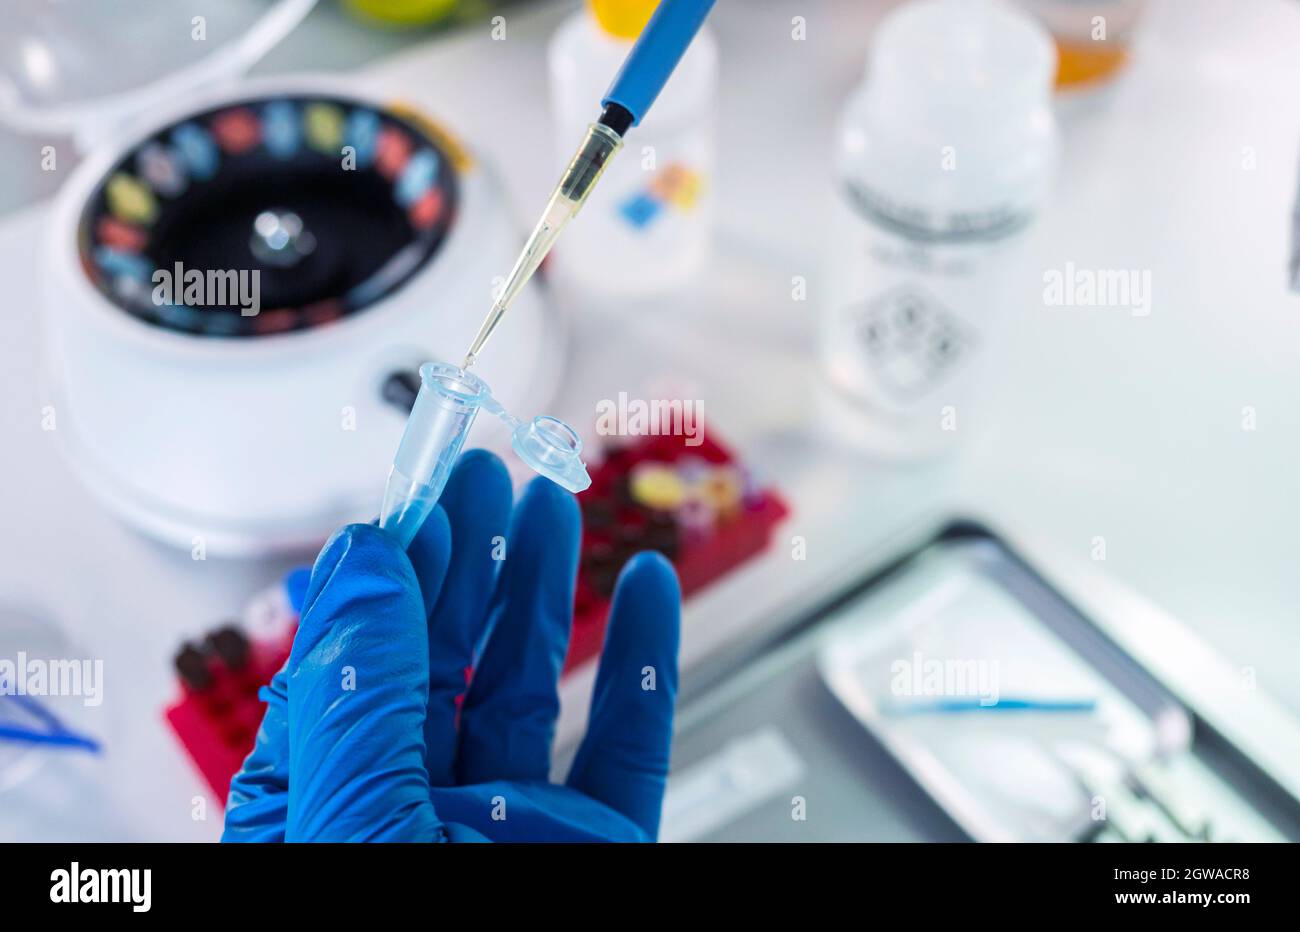 Police scientist prepares vial for crime lab analysis Stock Photo